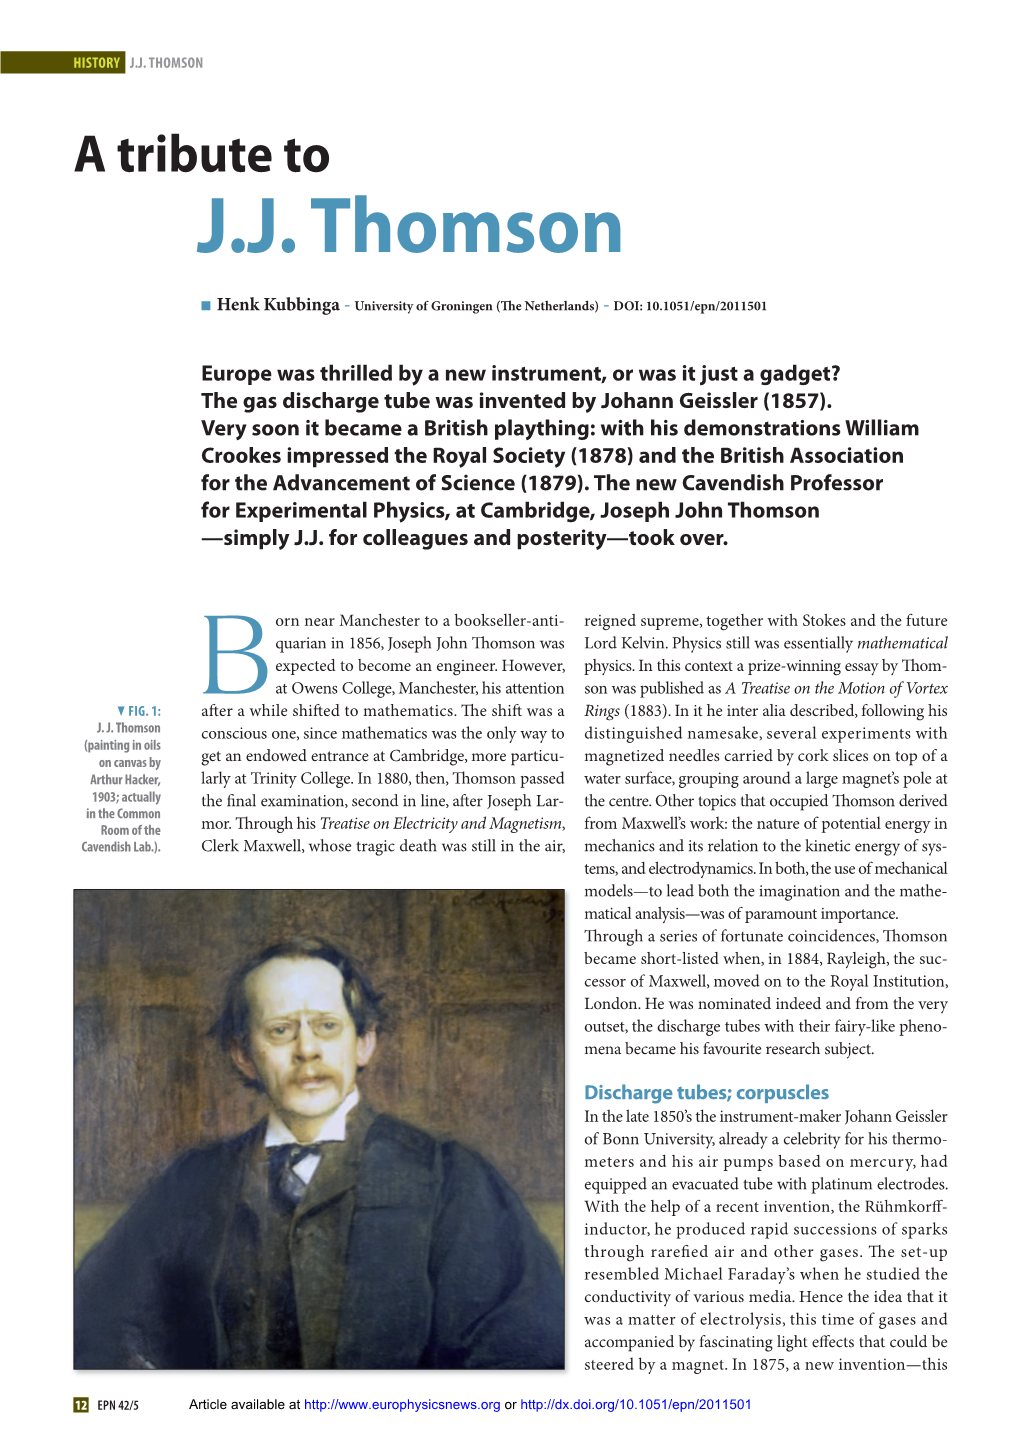 A Tribute to J.J. Thomson